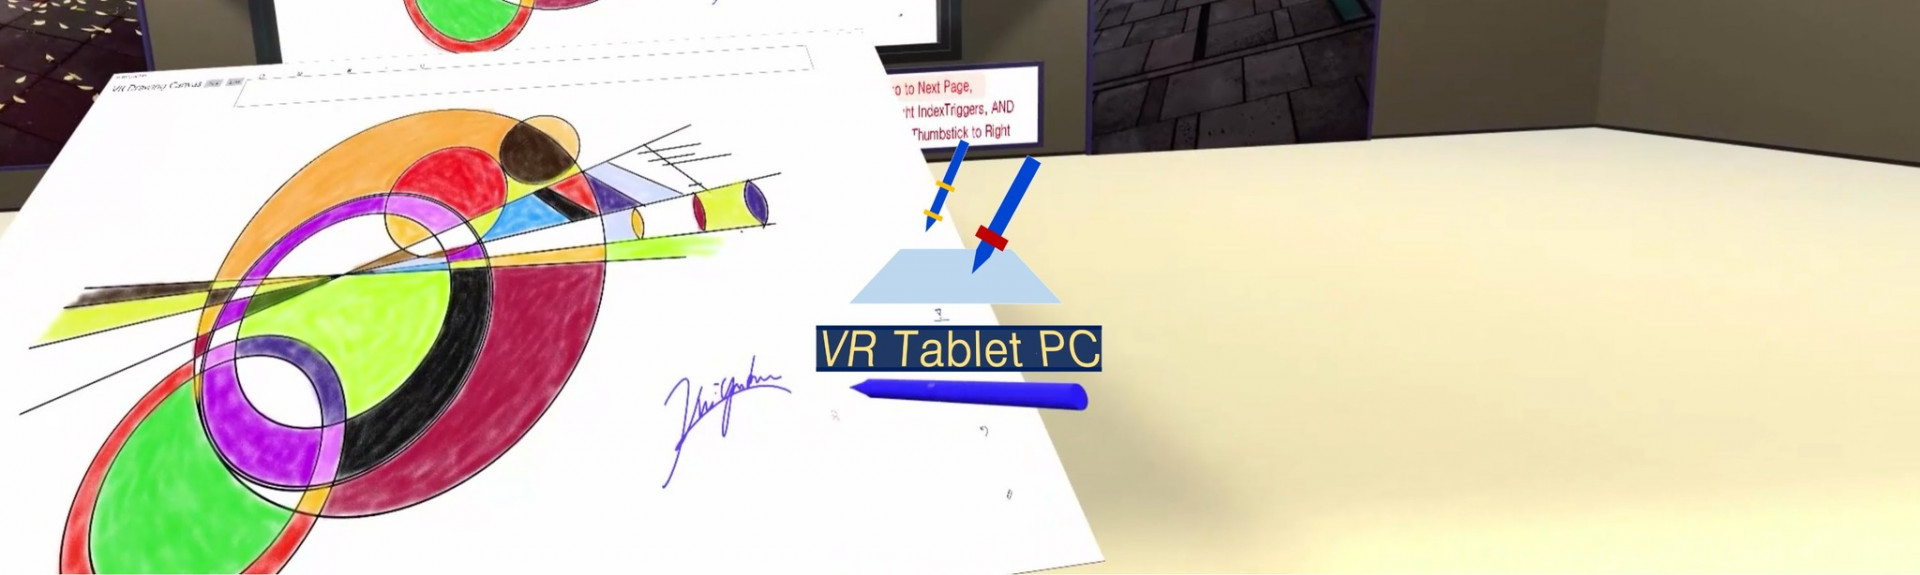 VR Tablet PC